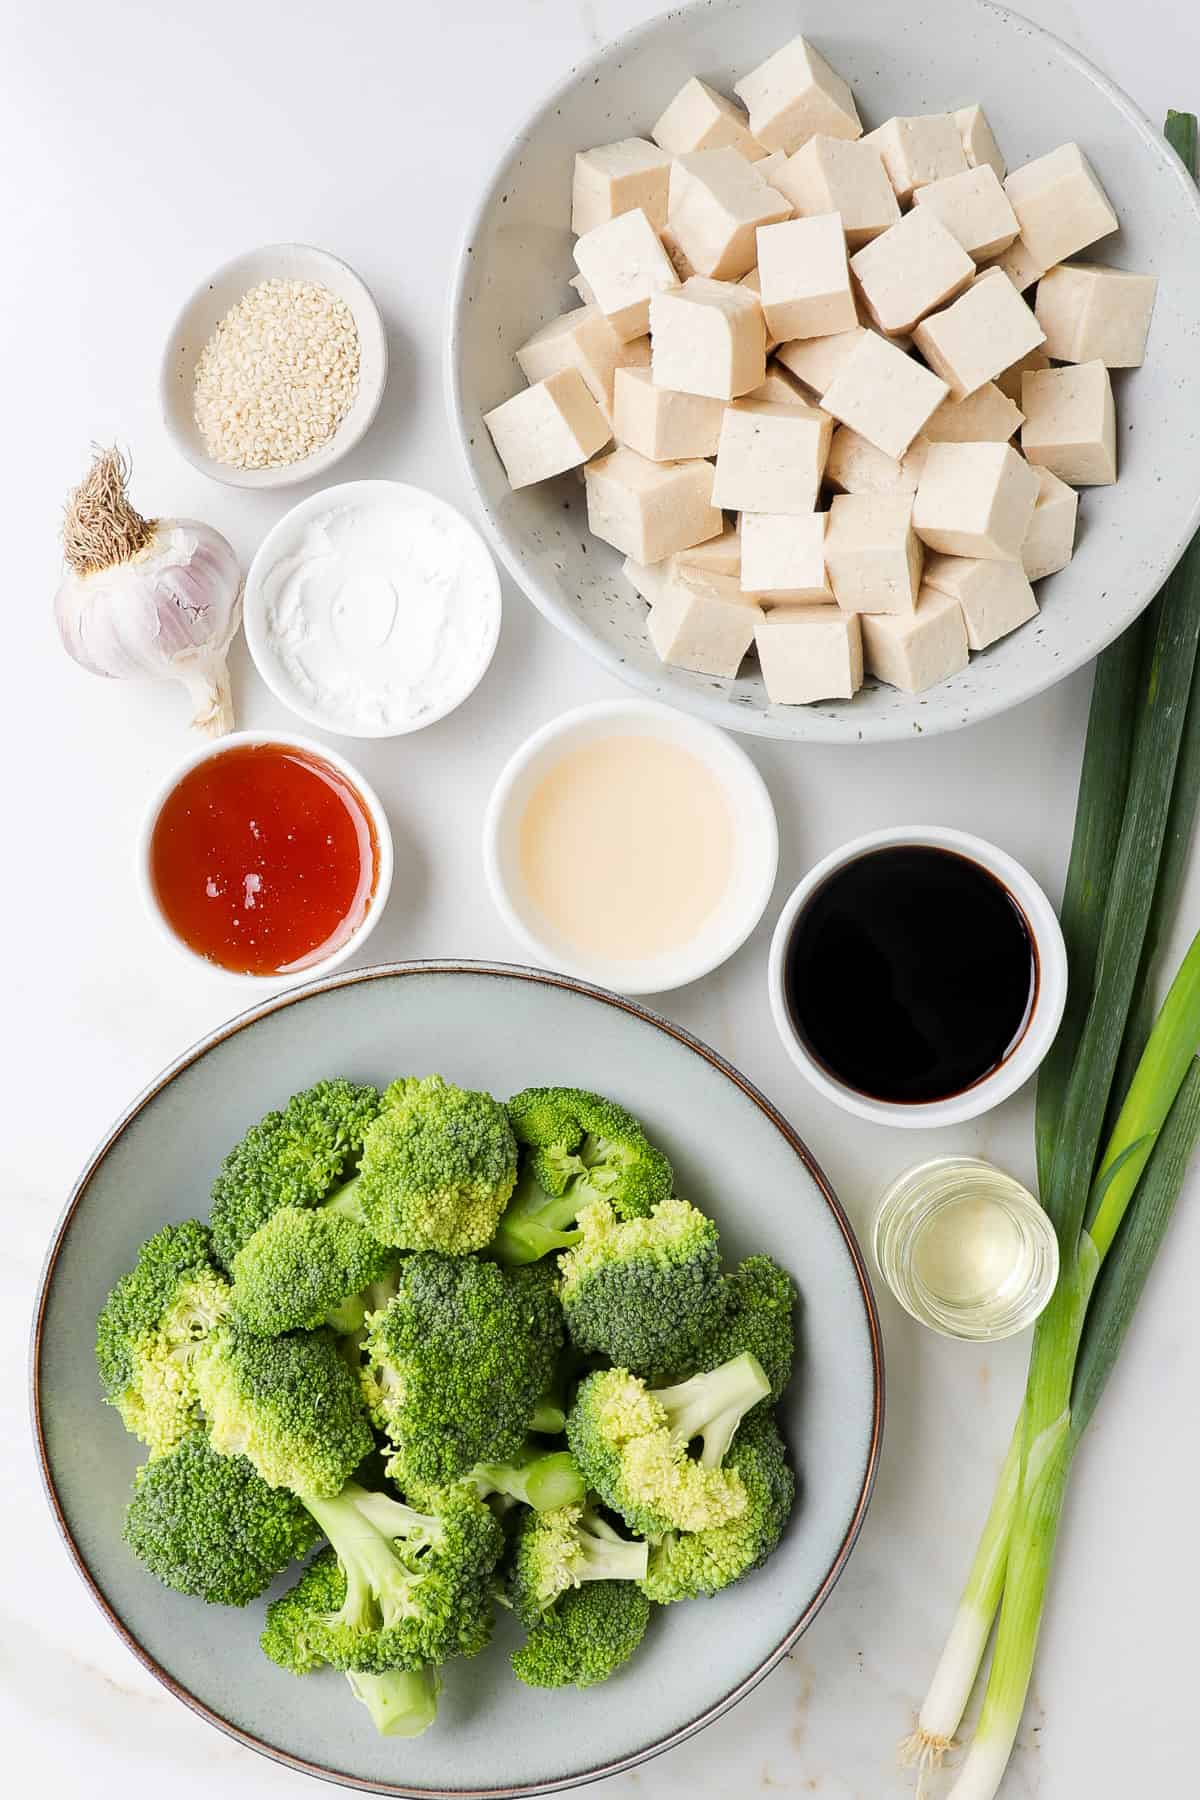 Ingredients shown to make honey garlic tofu and broccoli.